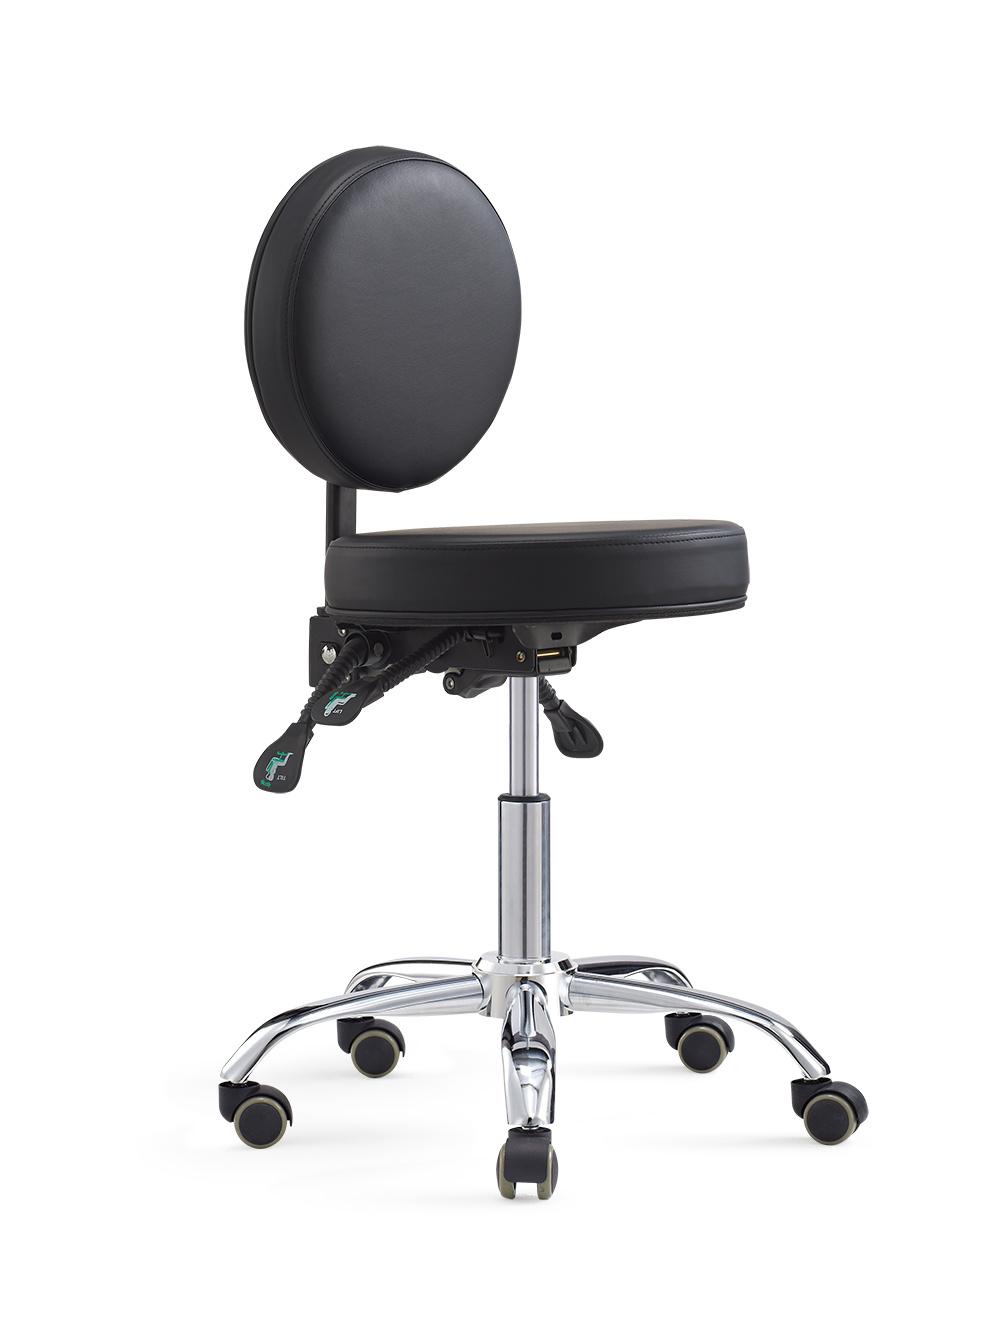 Swivel Adjustable Office Chair Ergonomic Computer Chair with Tilt Backrest